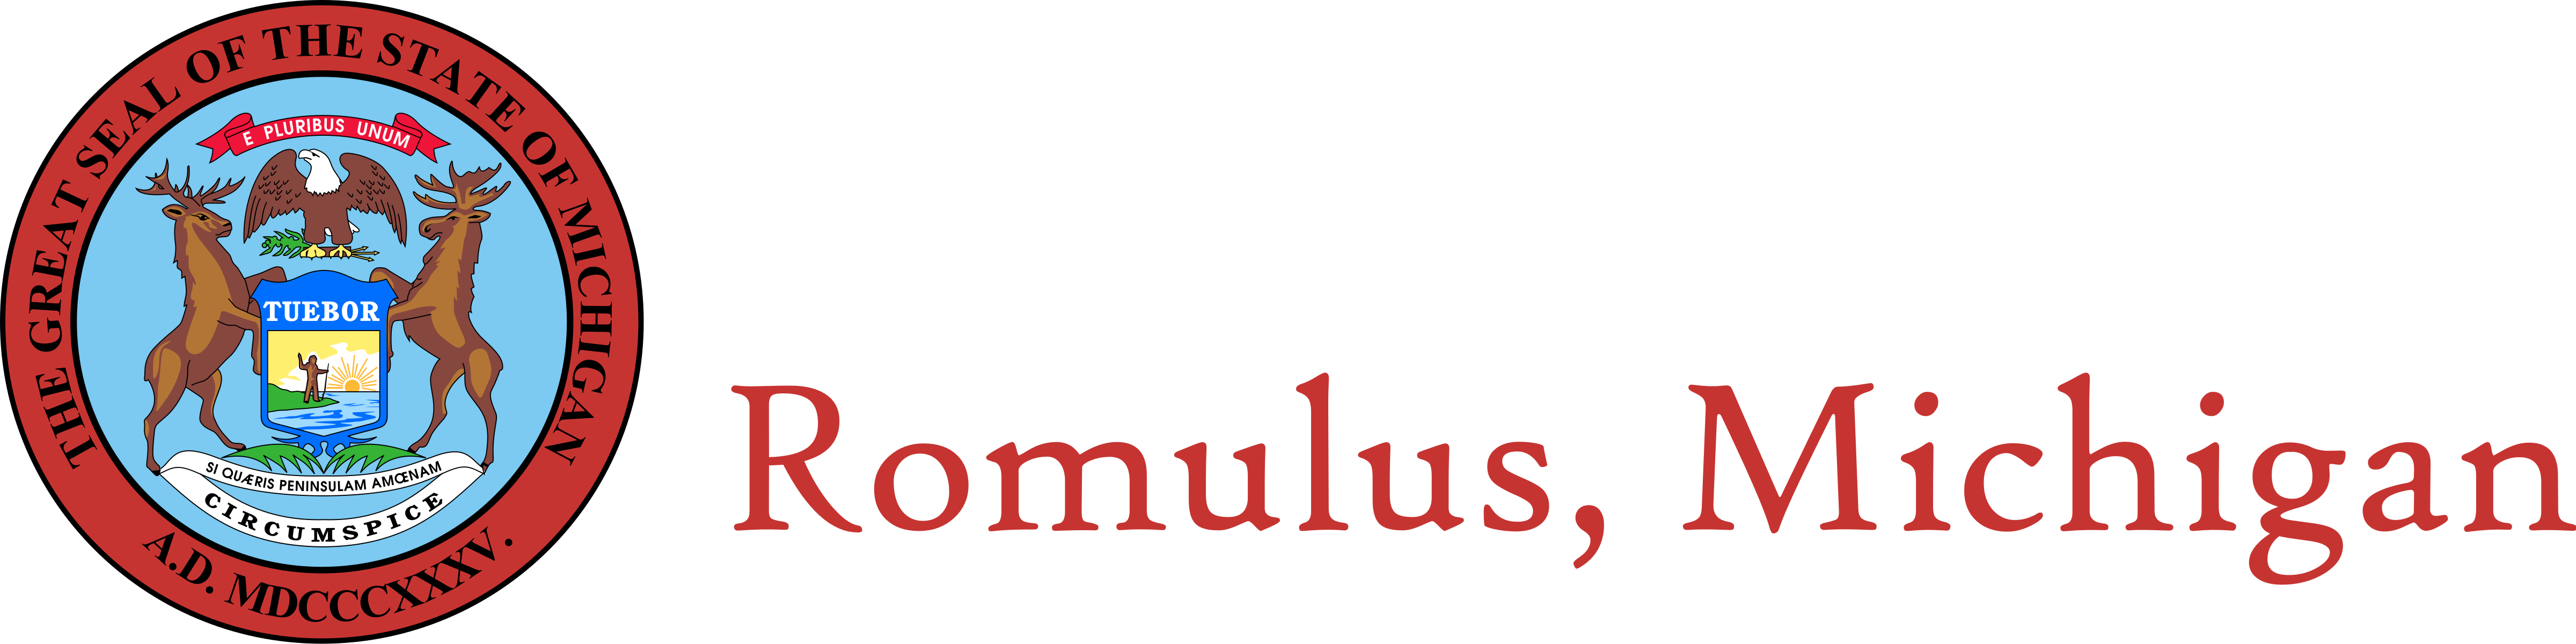 34th District Court Logo